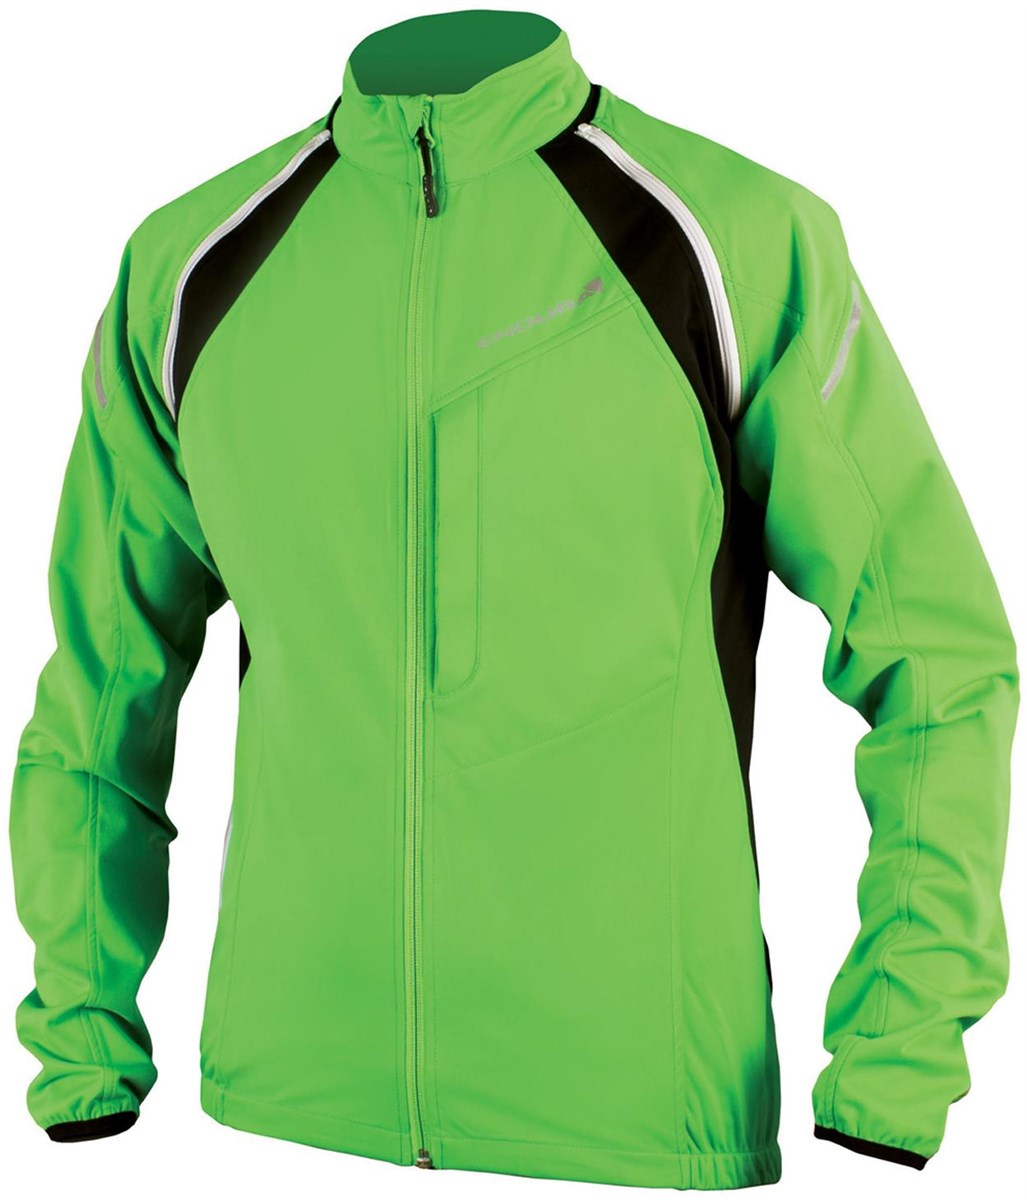 Endura Convert Softshell Windproof Cycling Jacket product image